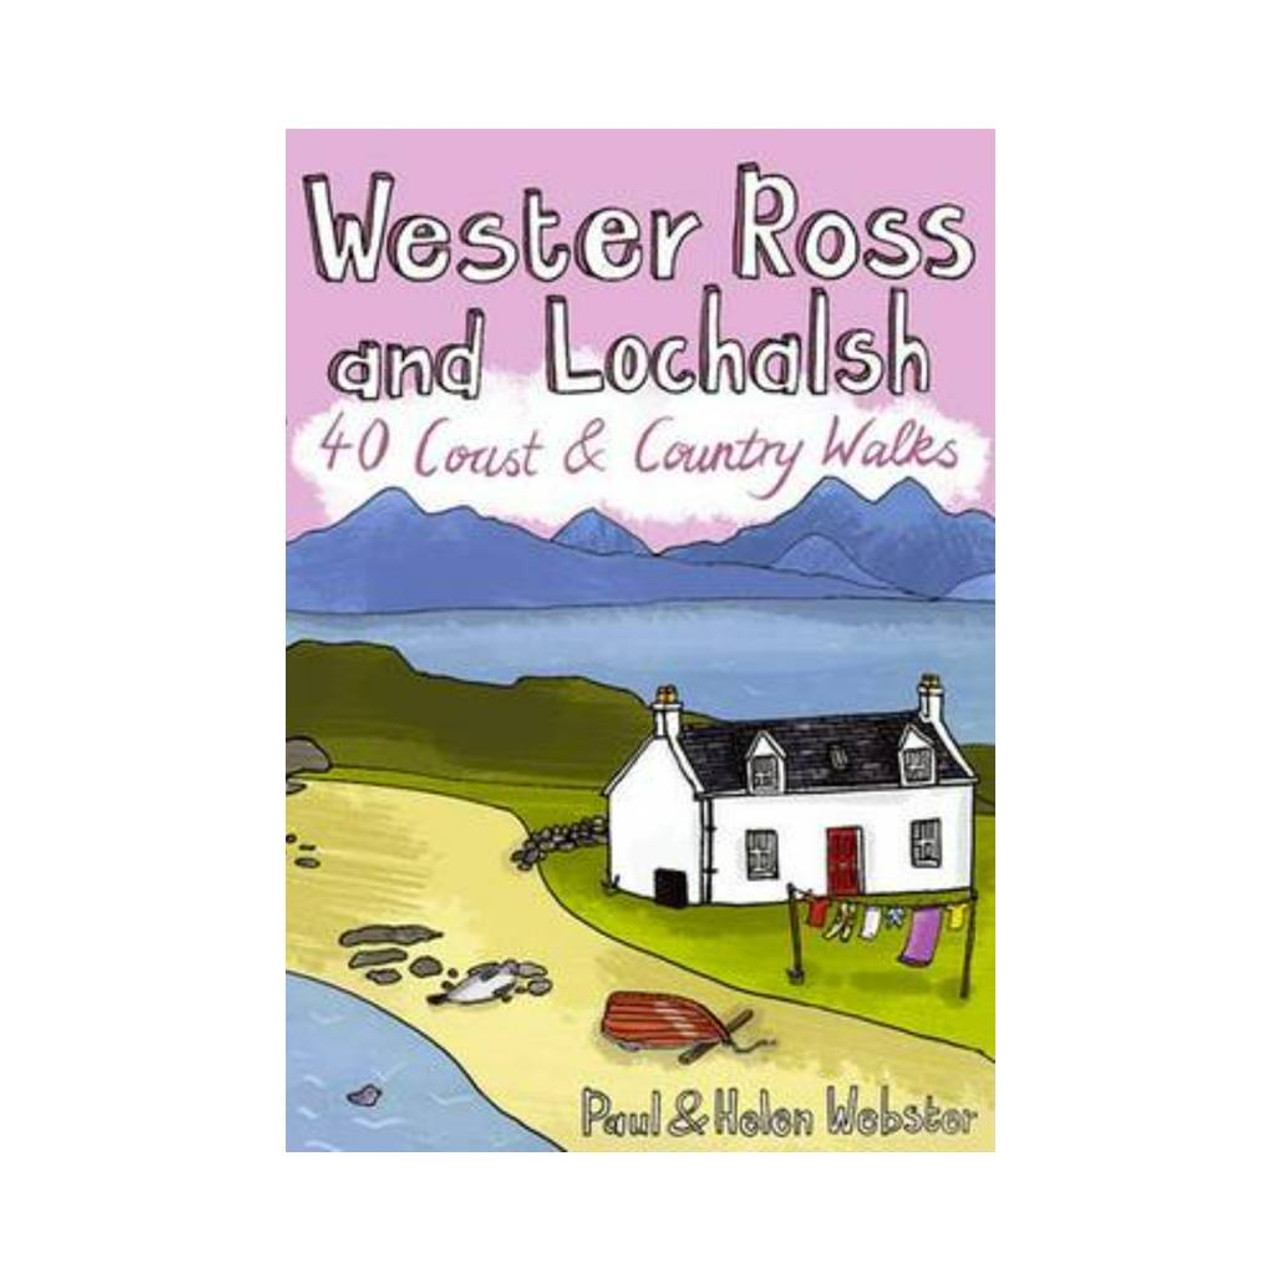 Wester Ross And Lochalsh: 40 CoastandCountry Walks